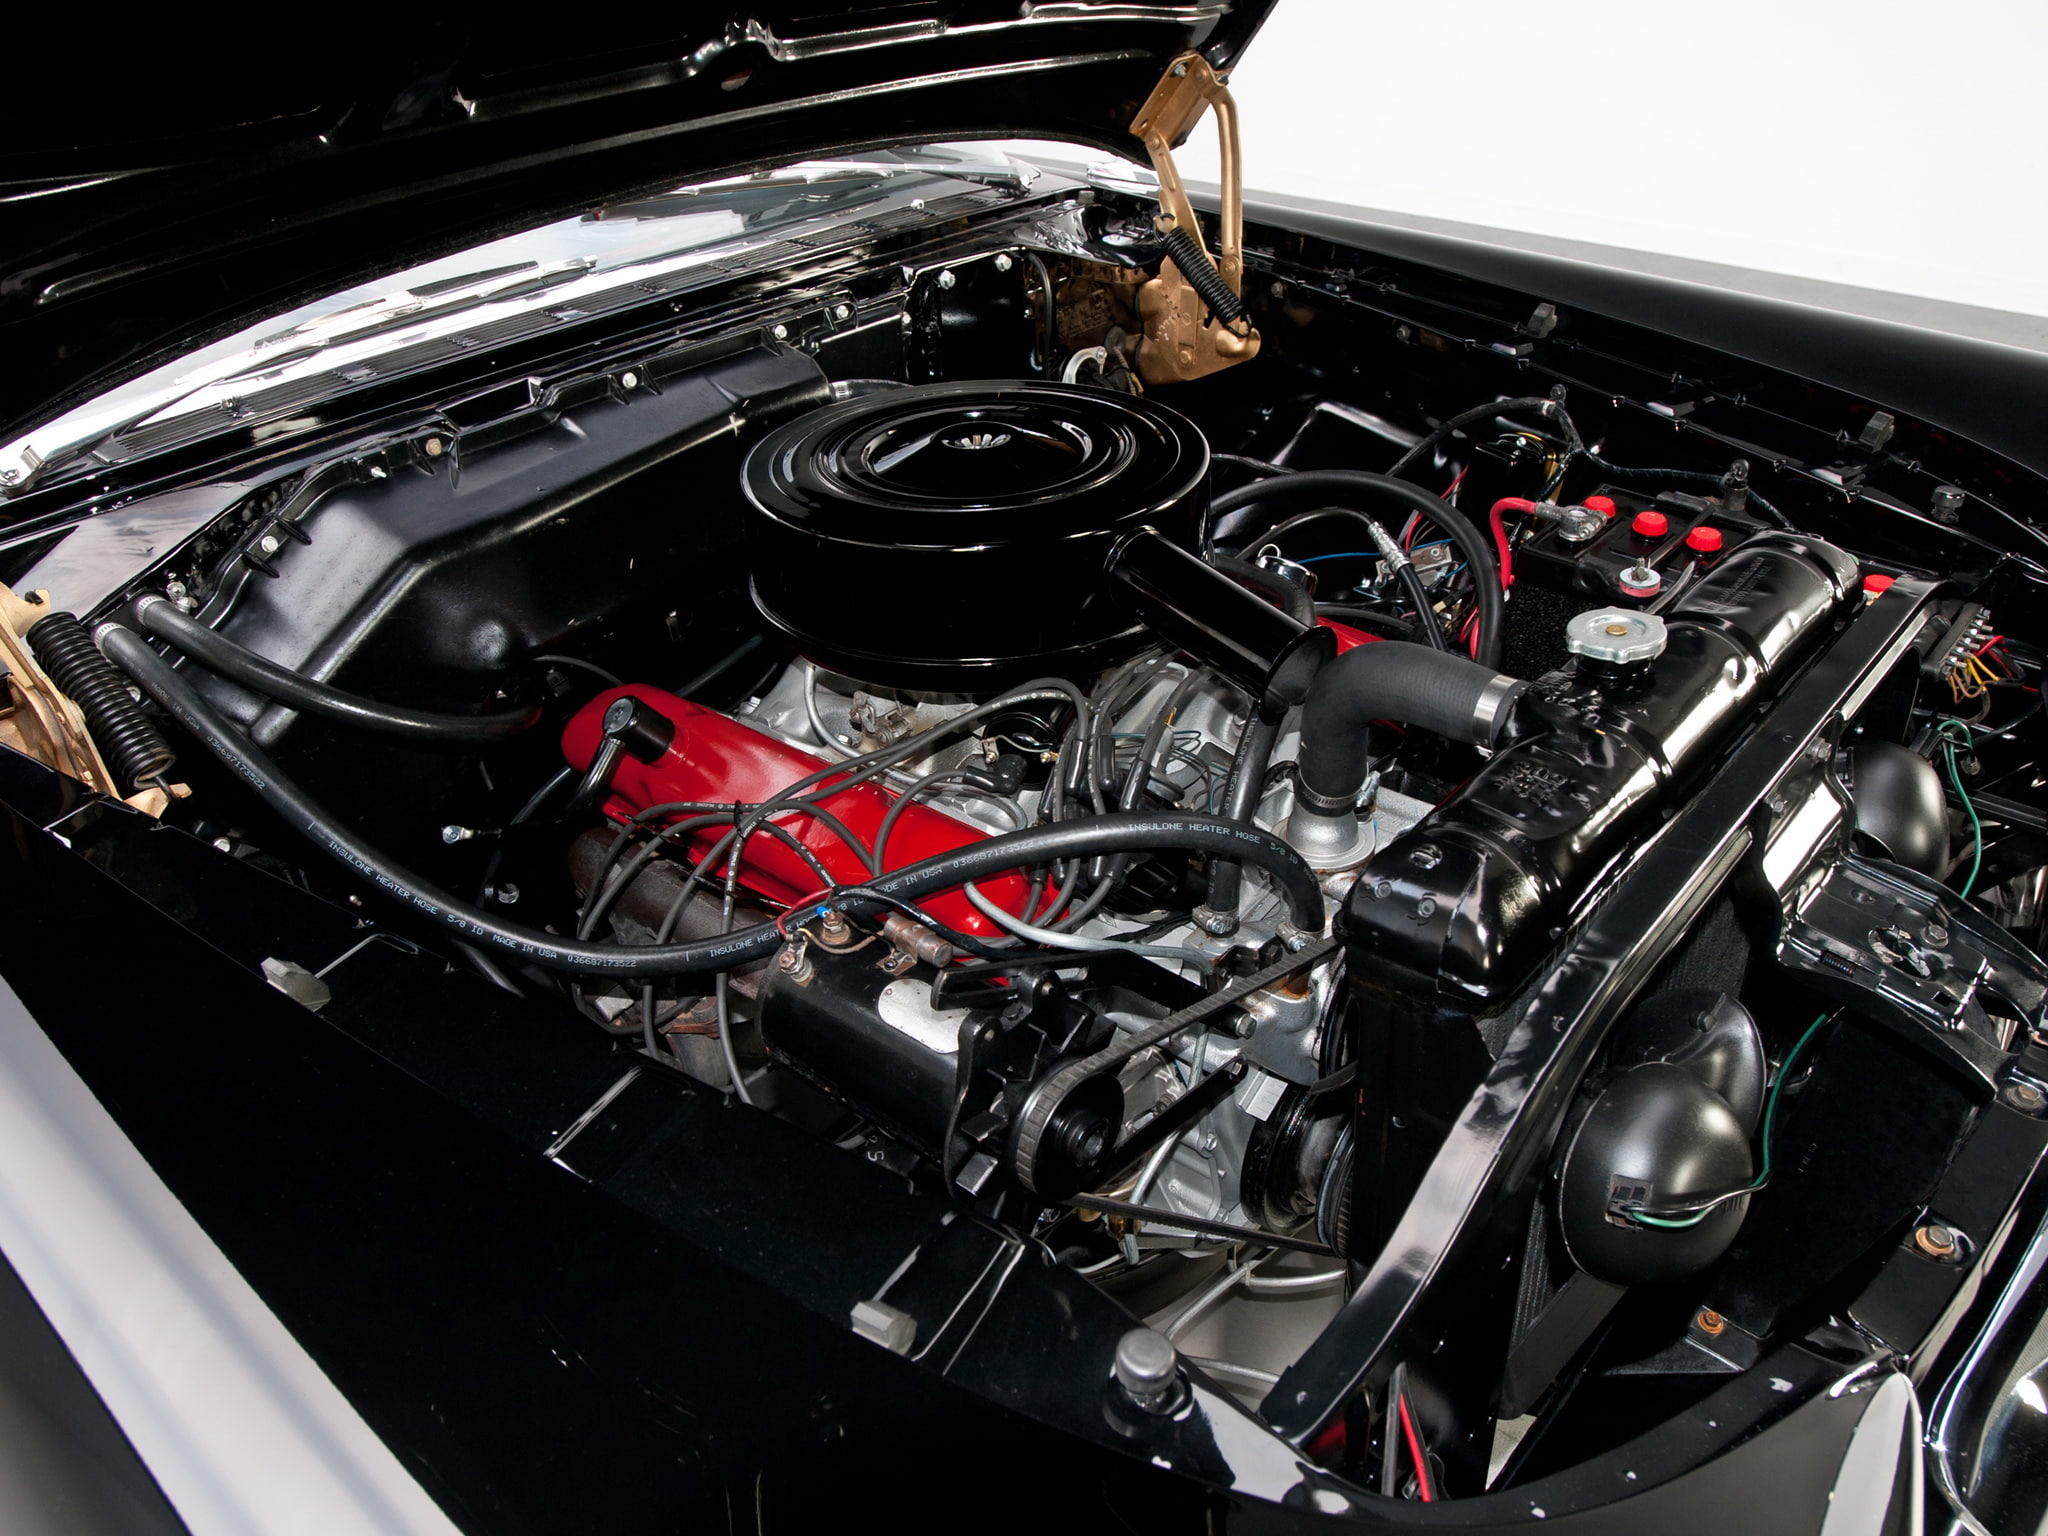 1959, coupe, d500, dodge, engine, hardtop, lancer, luxury, retro